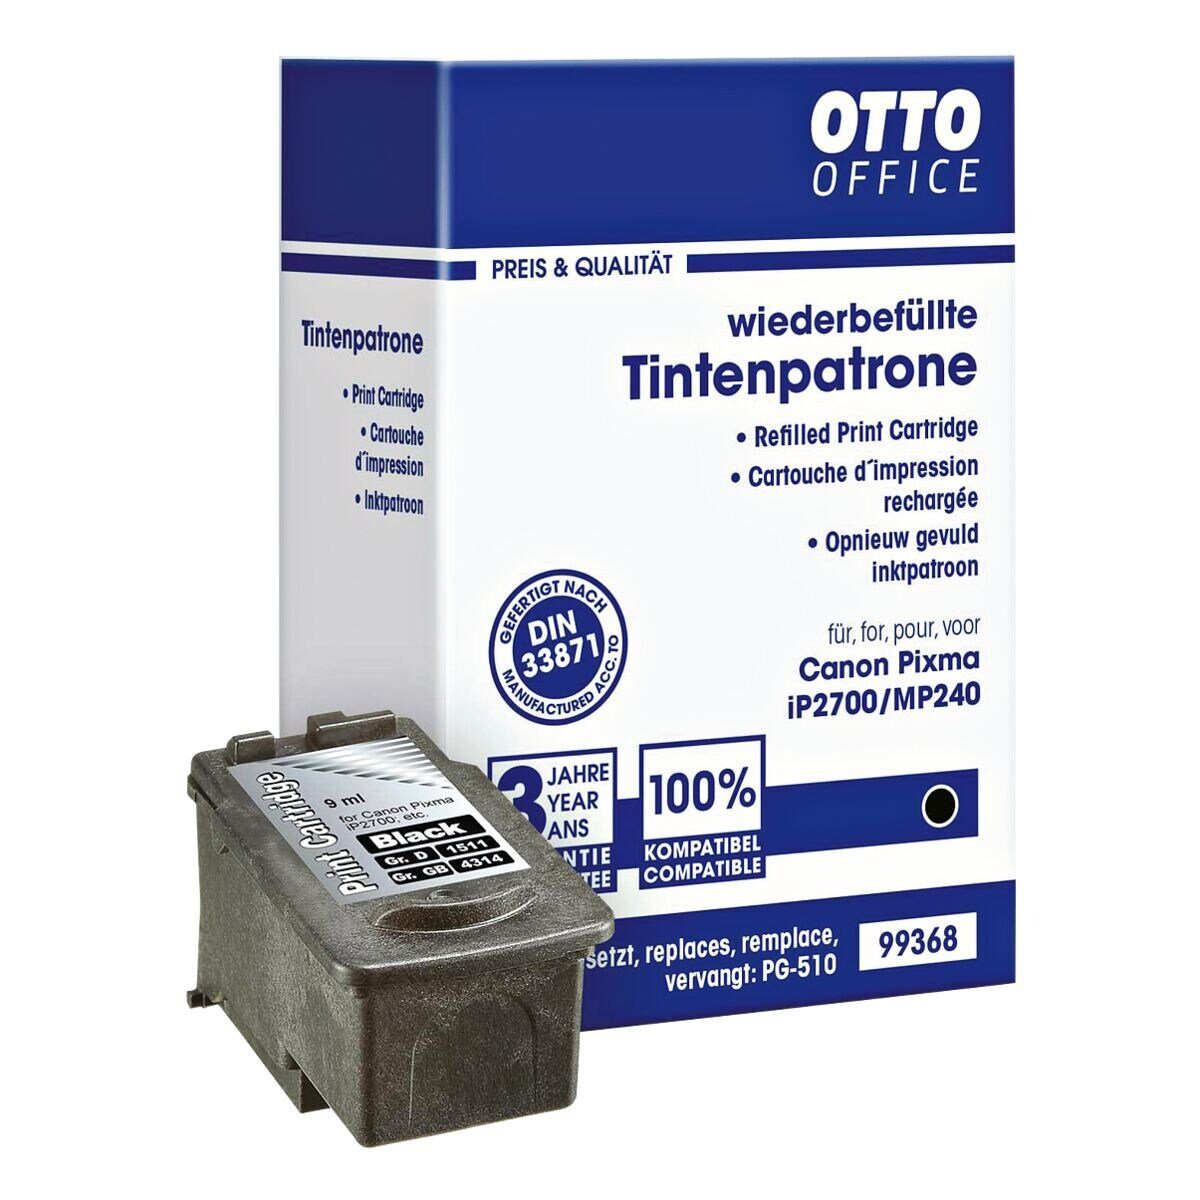 Office PG-510, PG-510 Office (ersetzt schwarz) Tintenpatrone Canon Otto